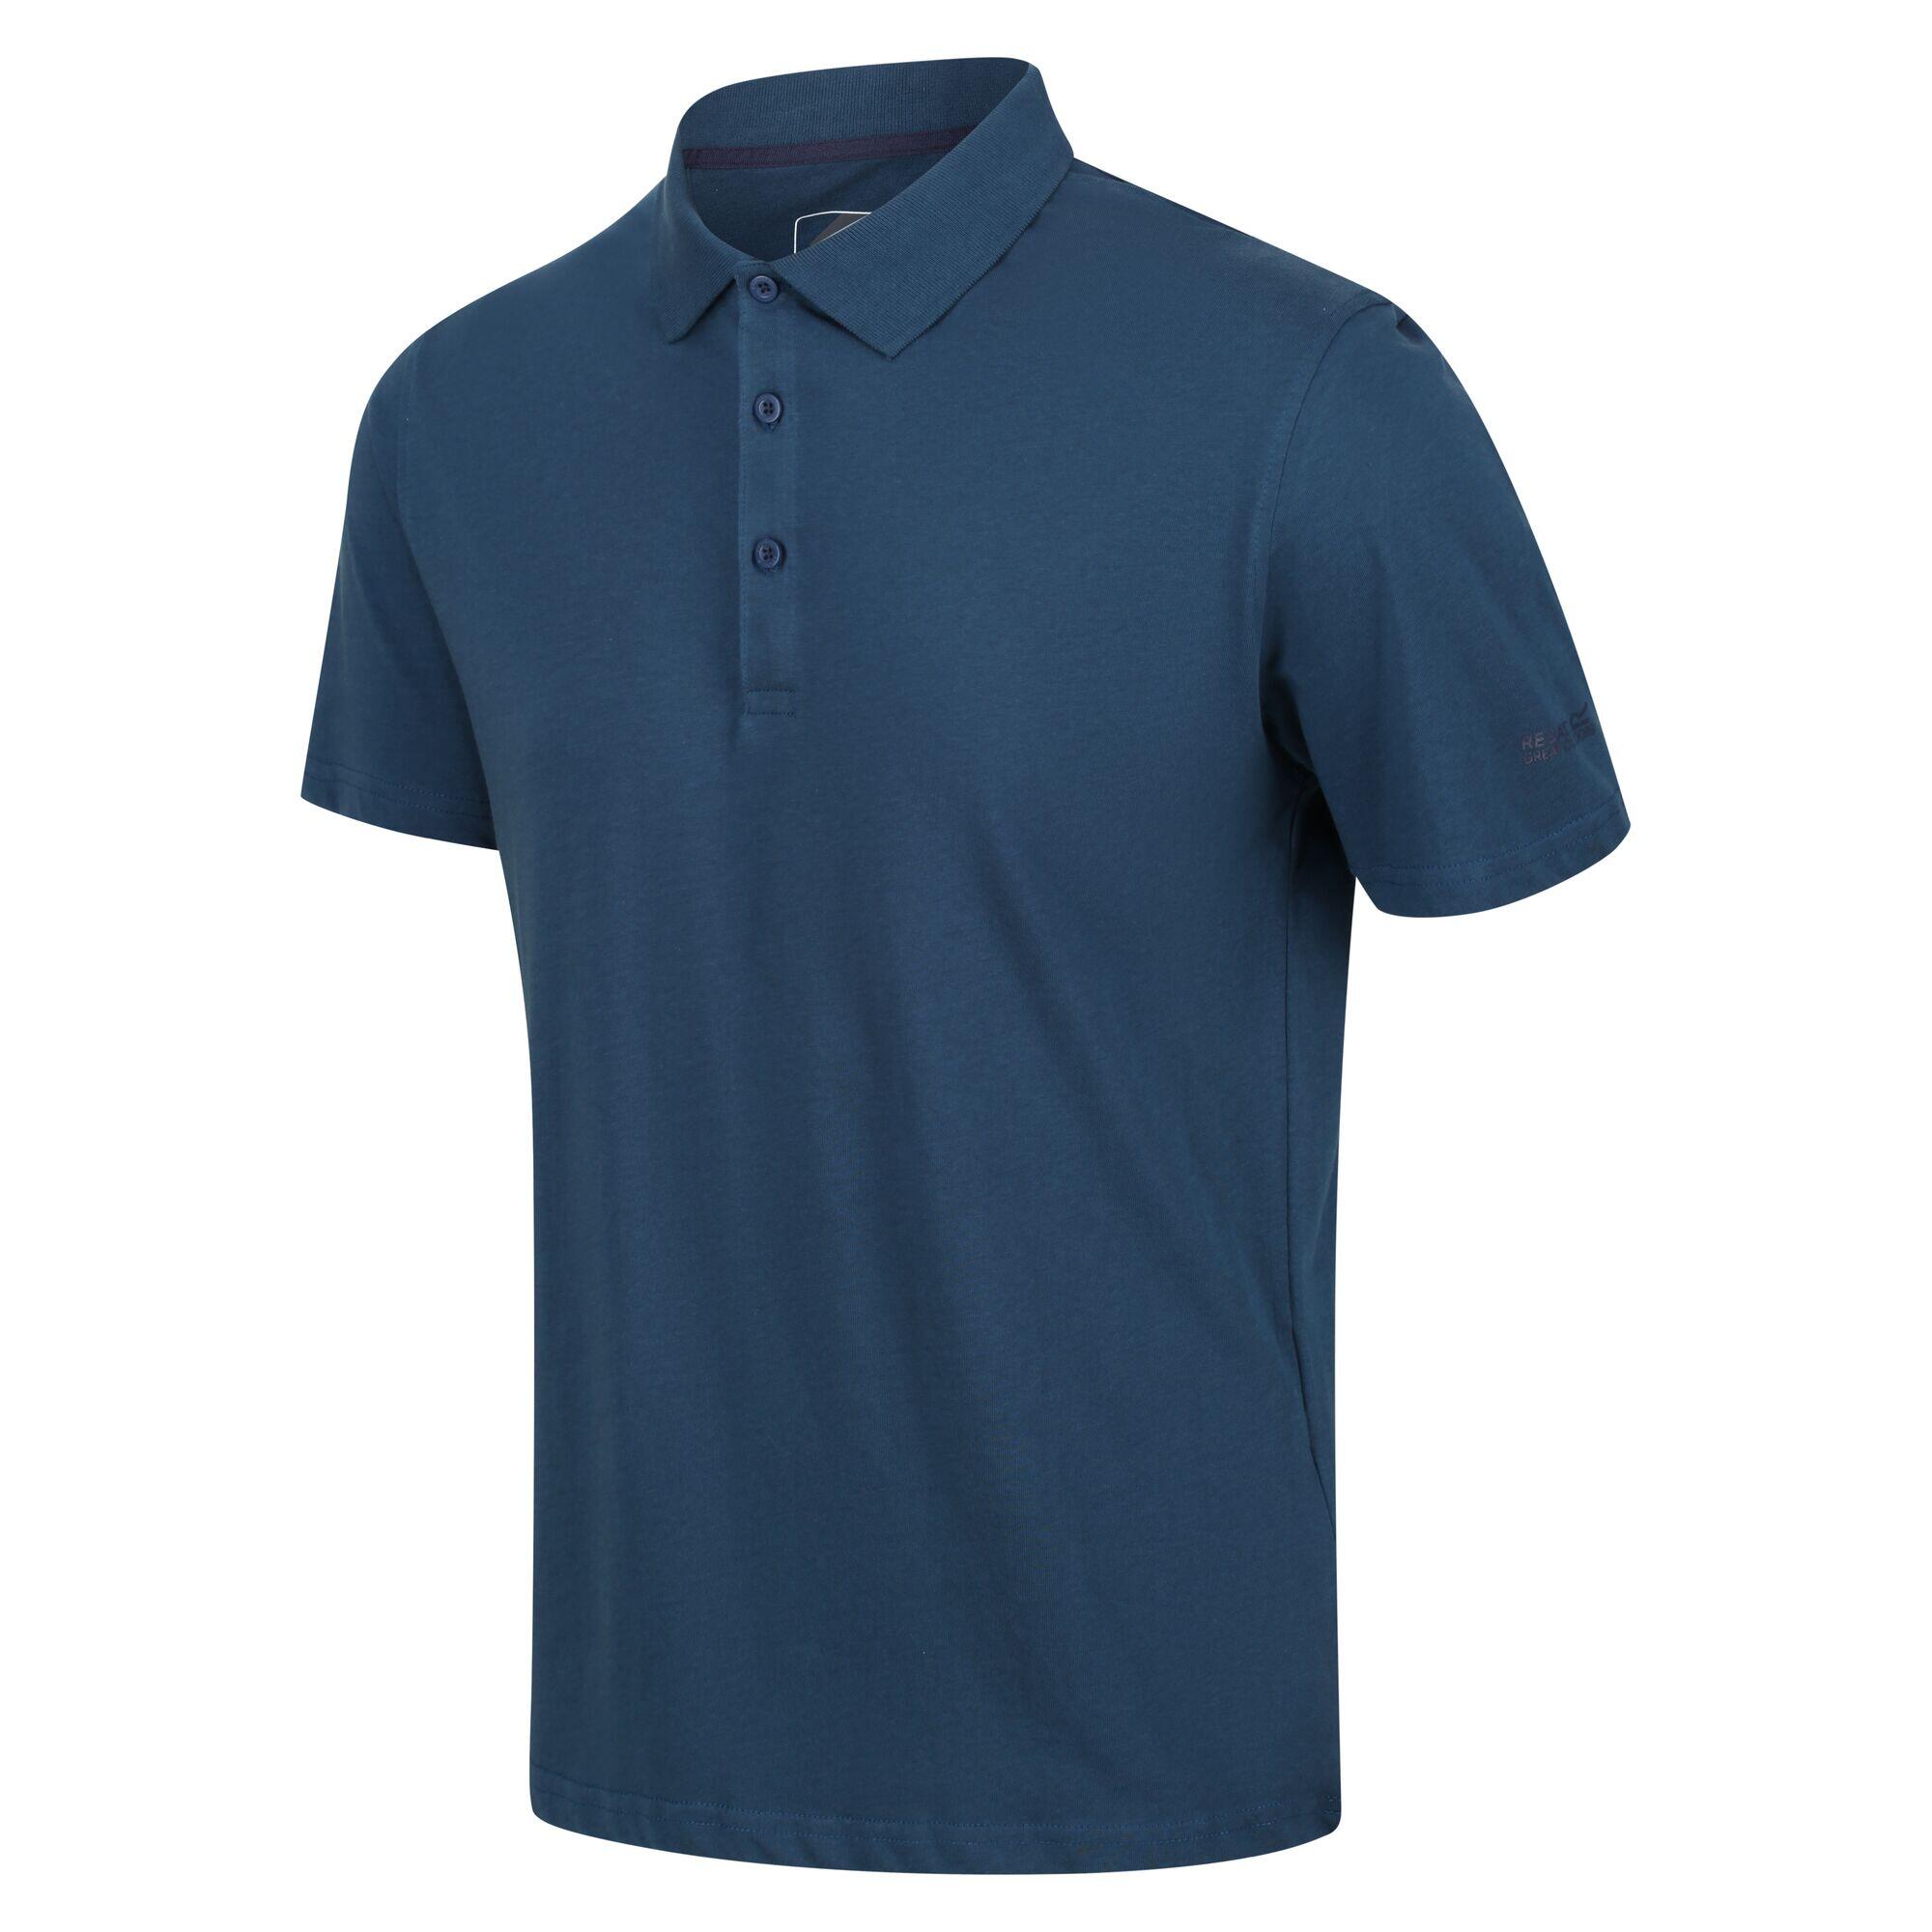 Sinton Men's Fitness Short Sleeve Polo Shirt - Moonlight Denim 4/5